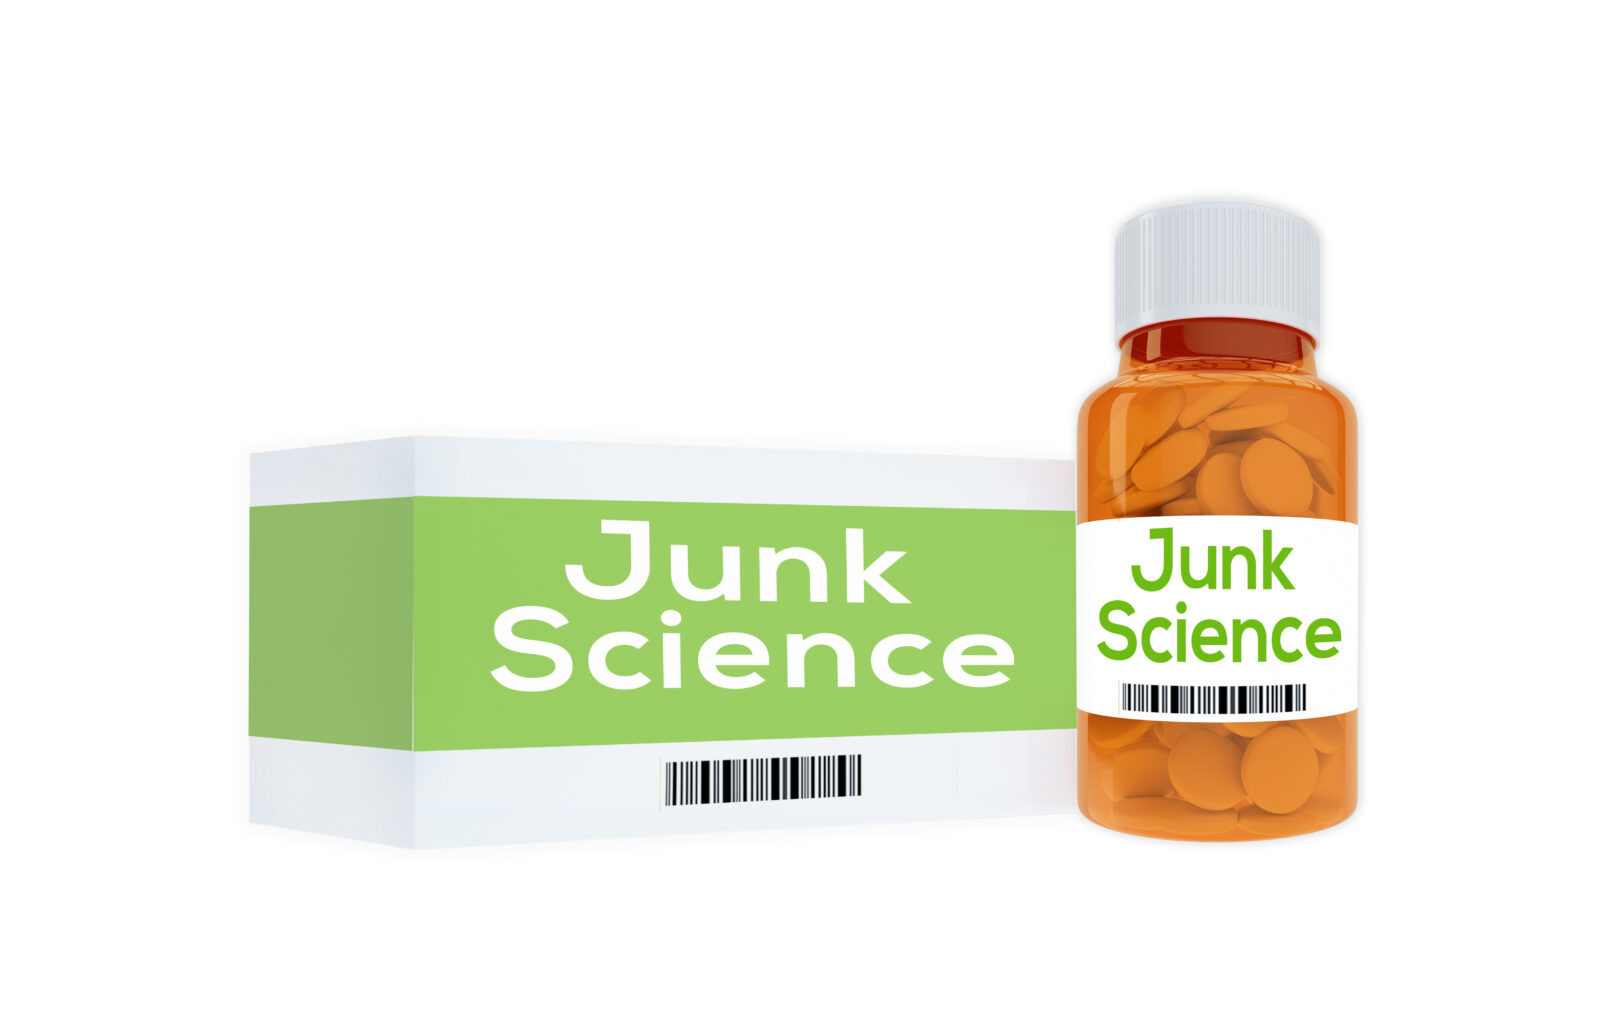 Junk Science concept